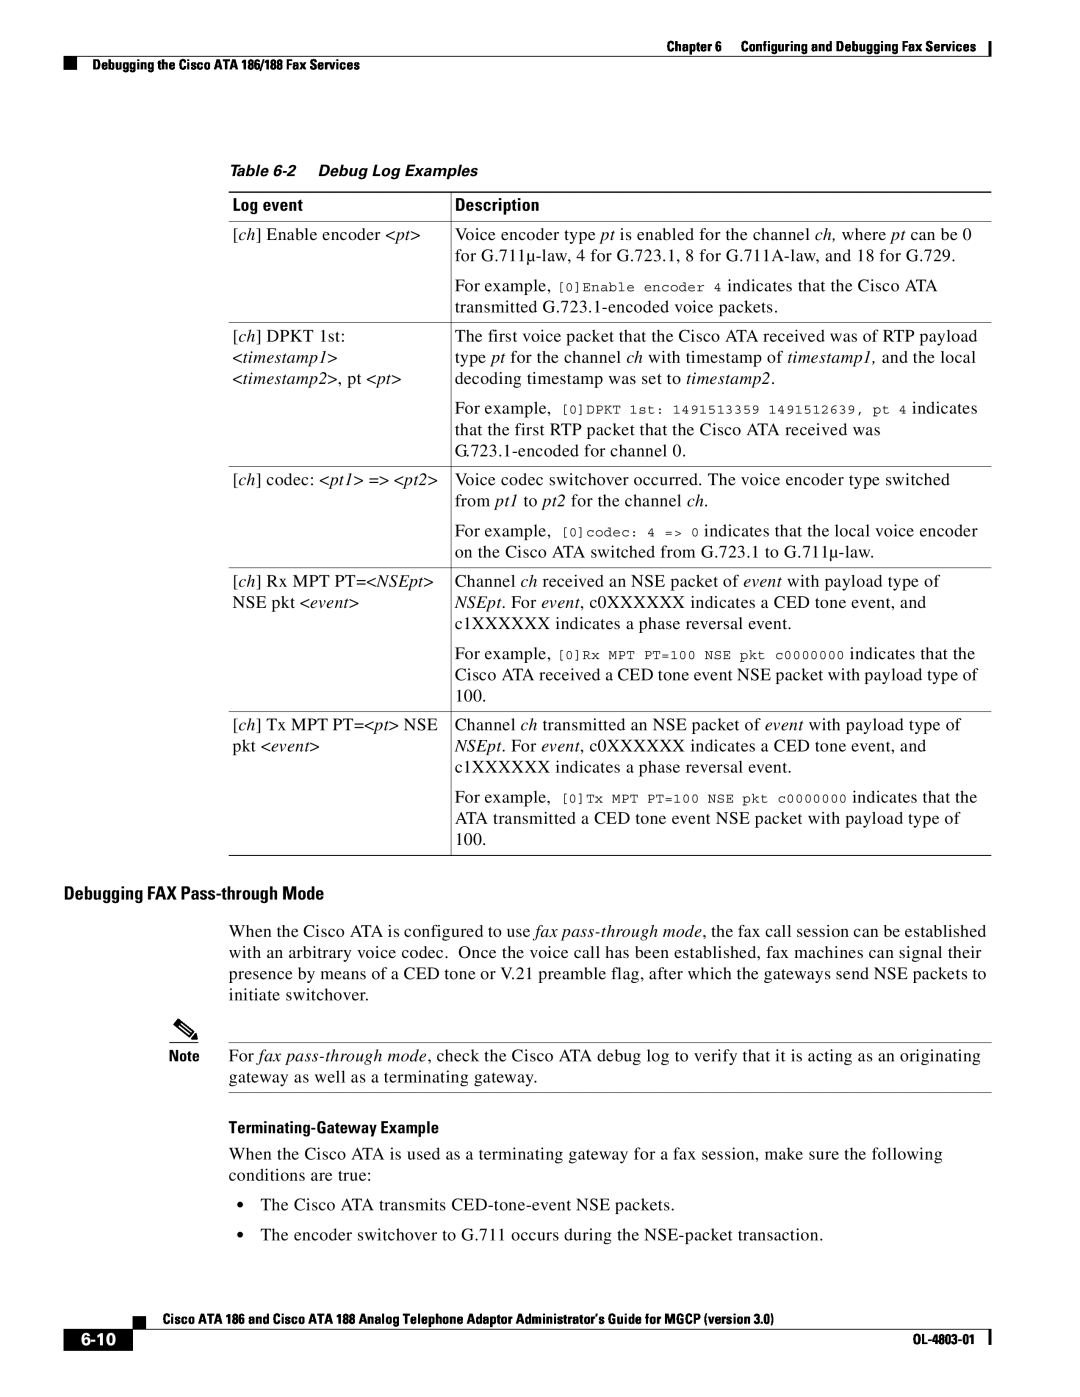 Cisco Systems ATA 186 manual Debugging FAX Pass-through Mode, Log event, timestamp1, timestamp2 , pt pt, 6-10, Description 